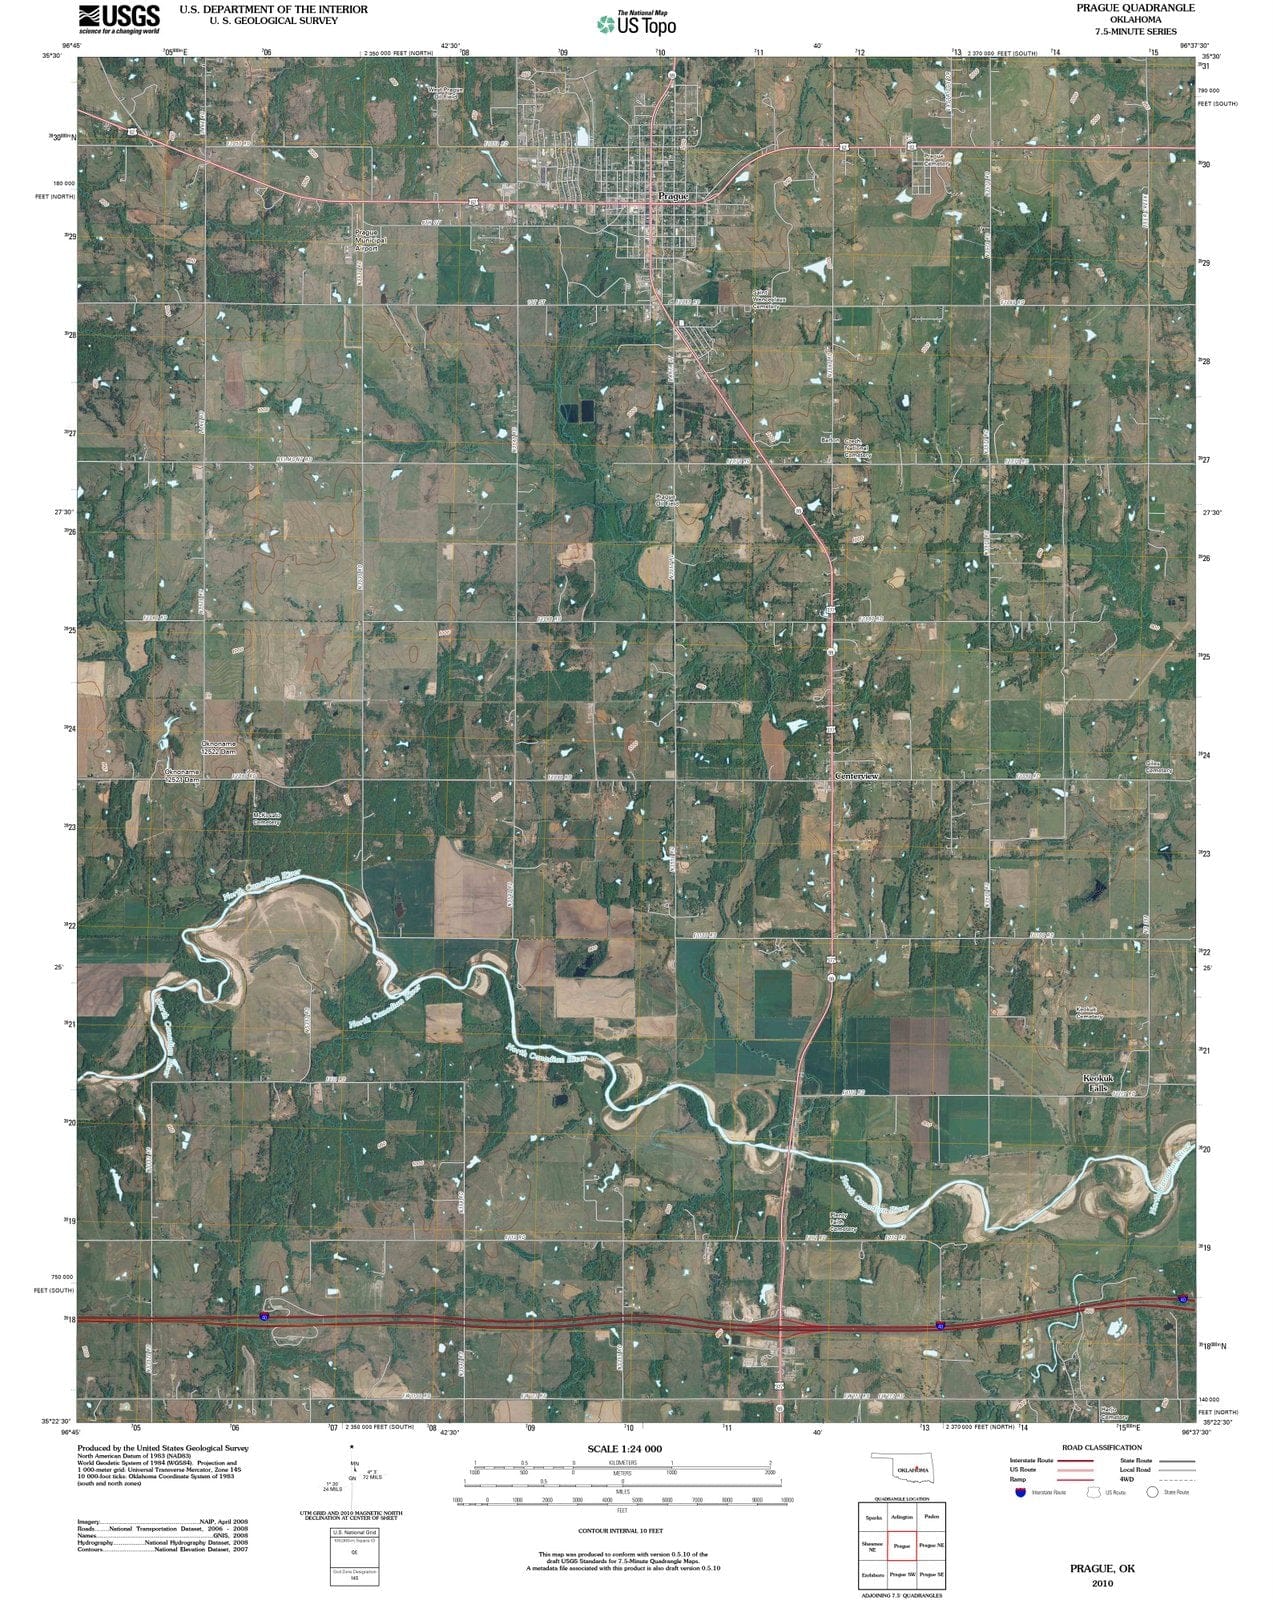 2010 Prague, OK - Oklahoma - USGS Topographic Map